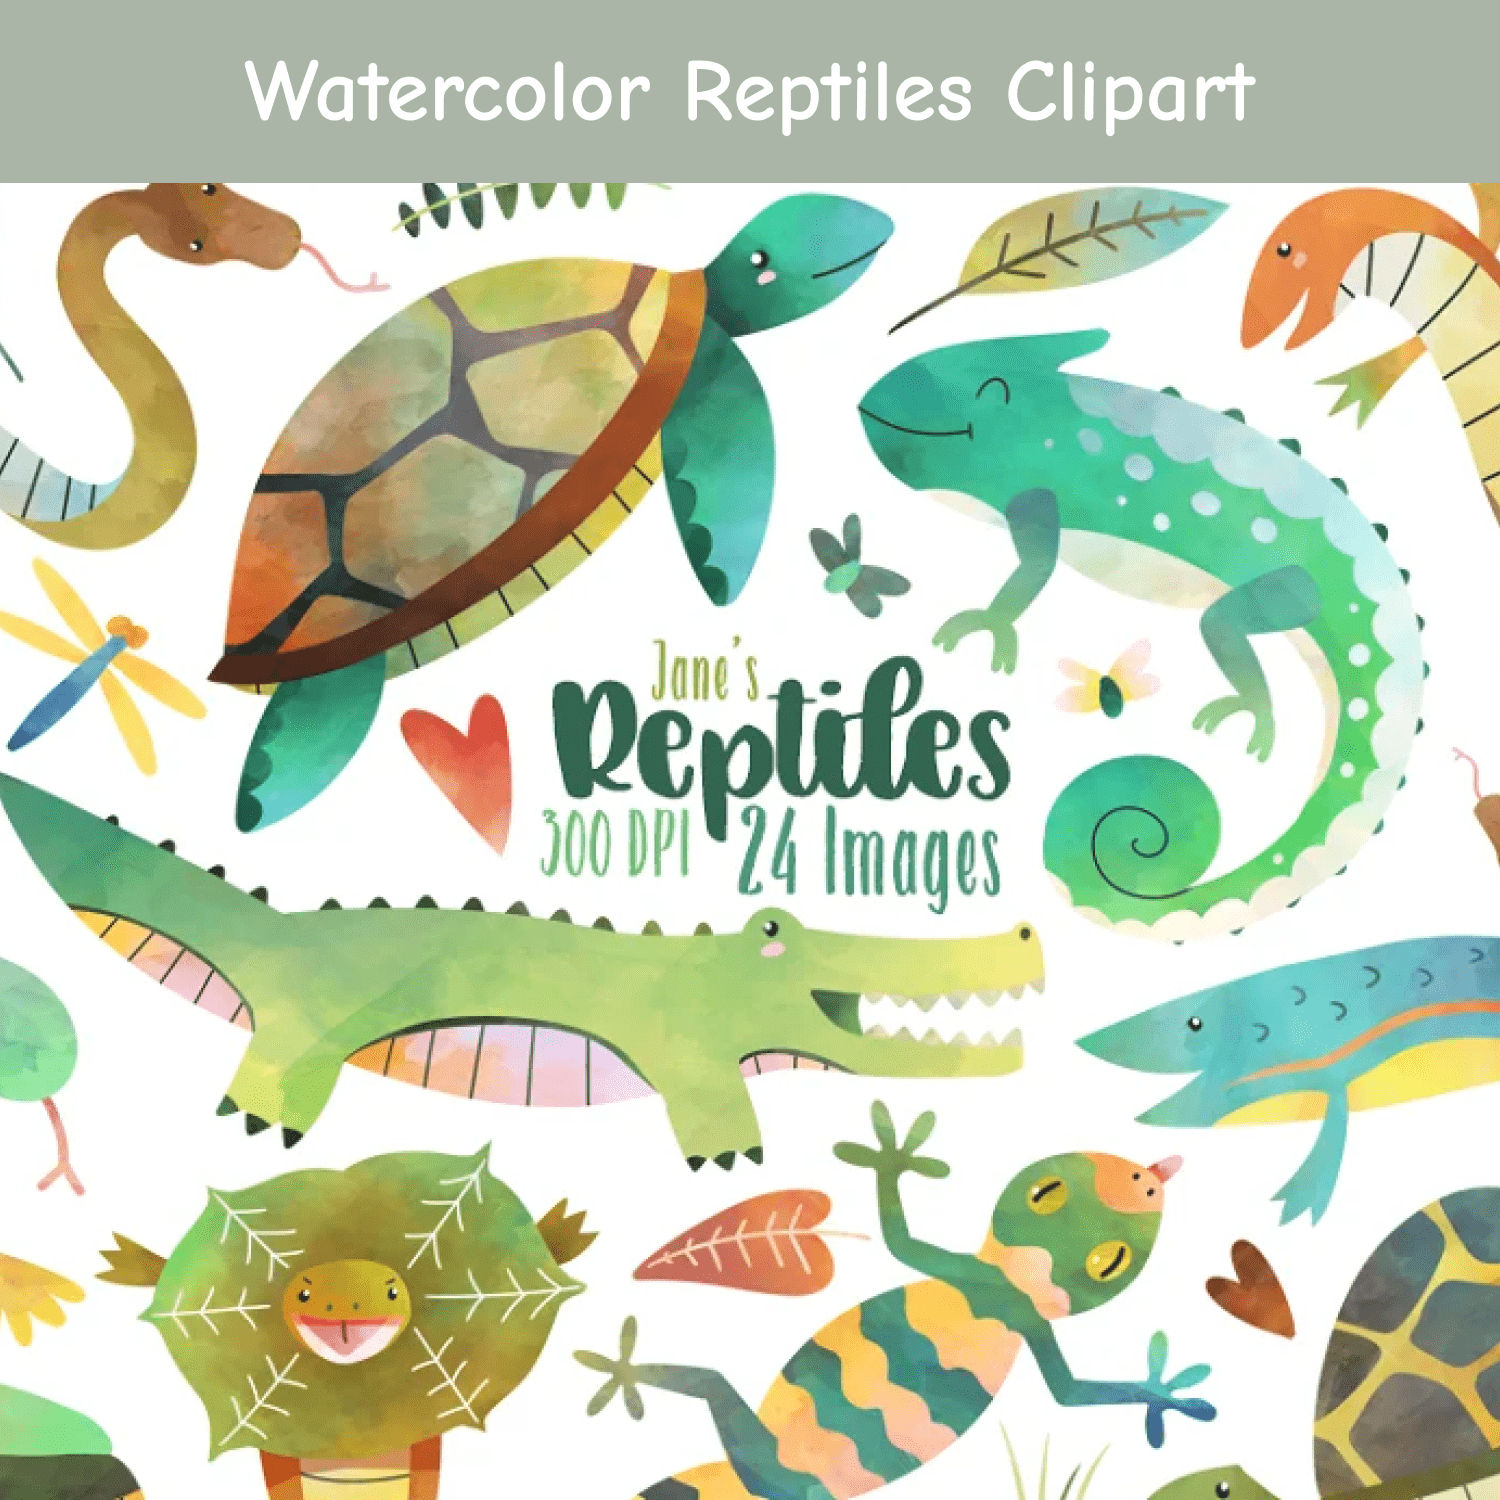 Watercolor Reptiles Clipart cover.